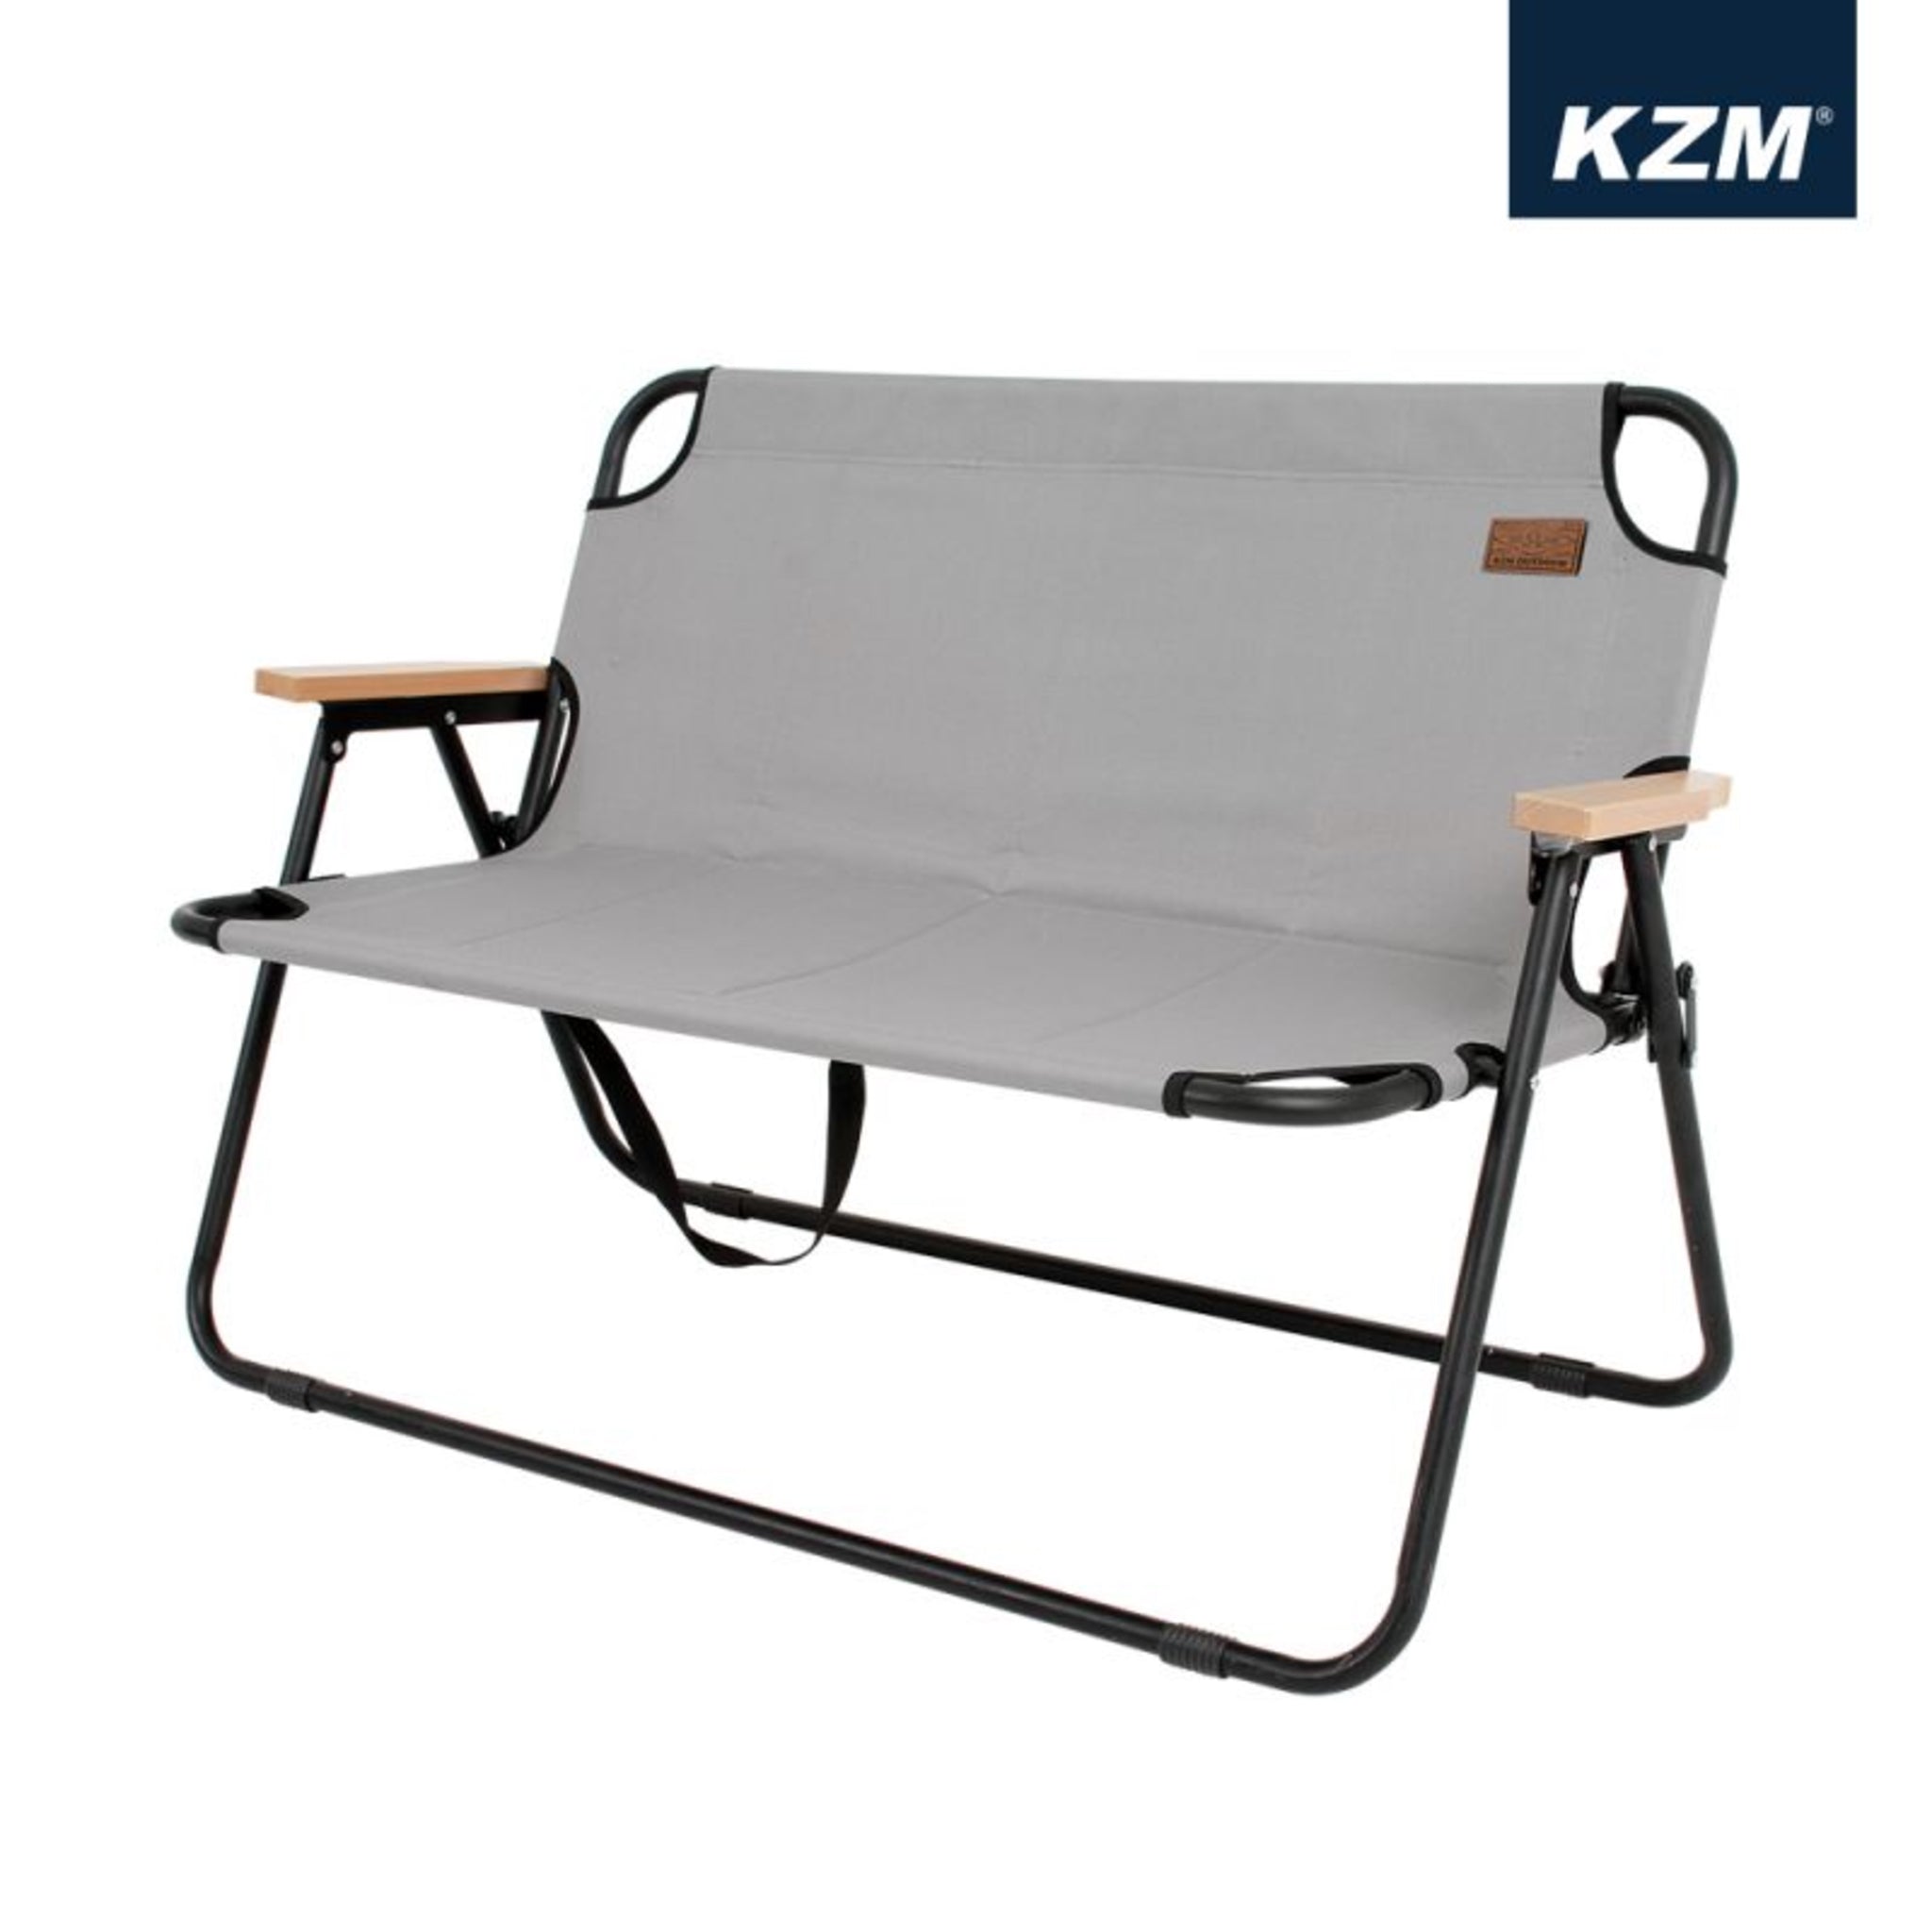 KAZMI KZM 素面雙人折疊椅 K20T1C014